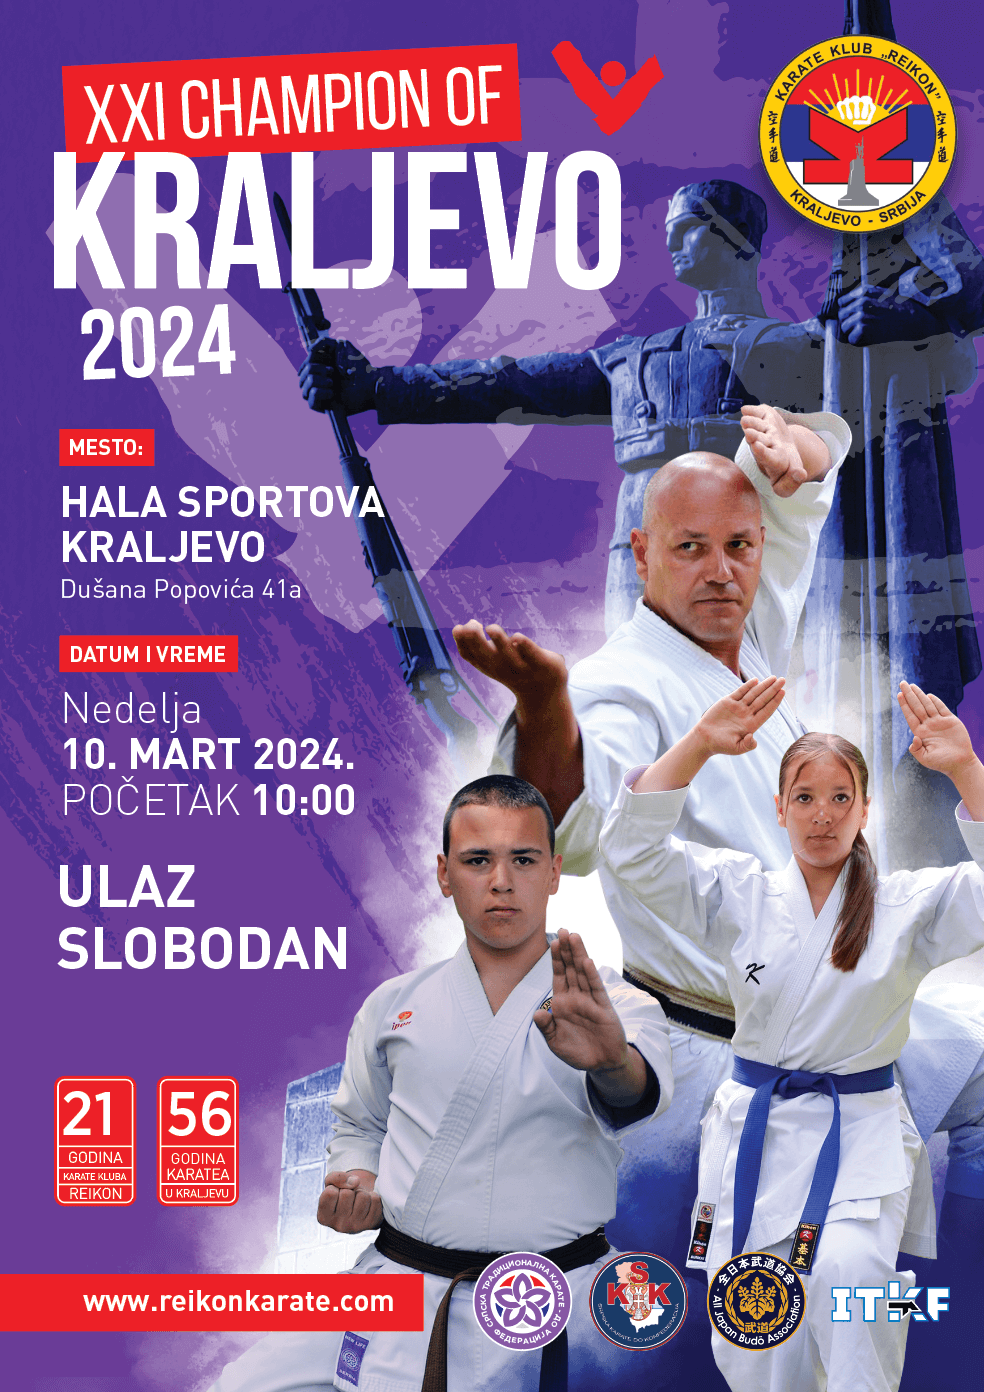 XXI Champion of Kraljevo 2024